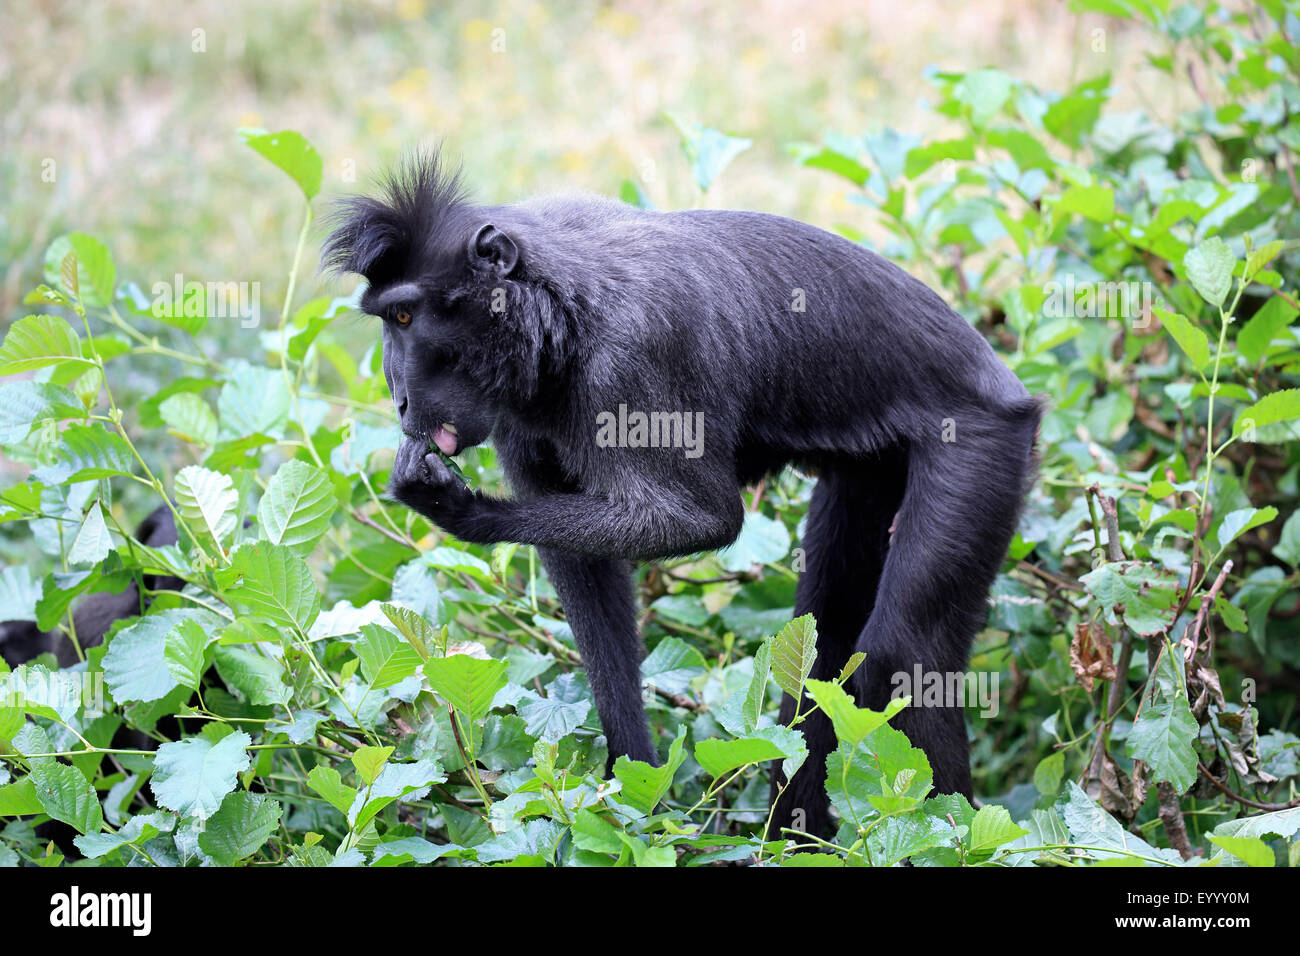 Celebes ape, Celebes black ape (Macaca nigra), on the feed Stock Photo